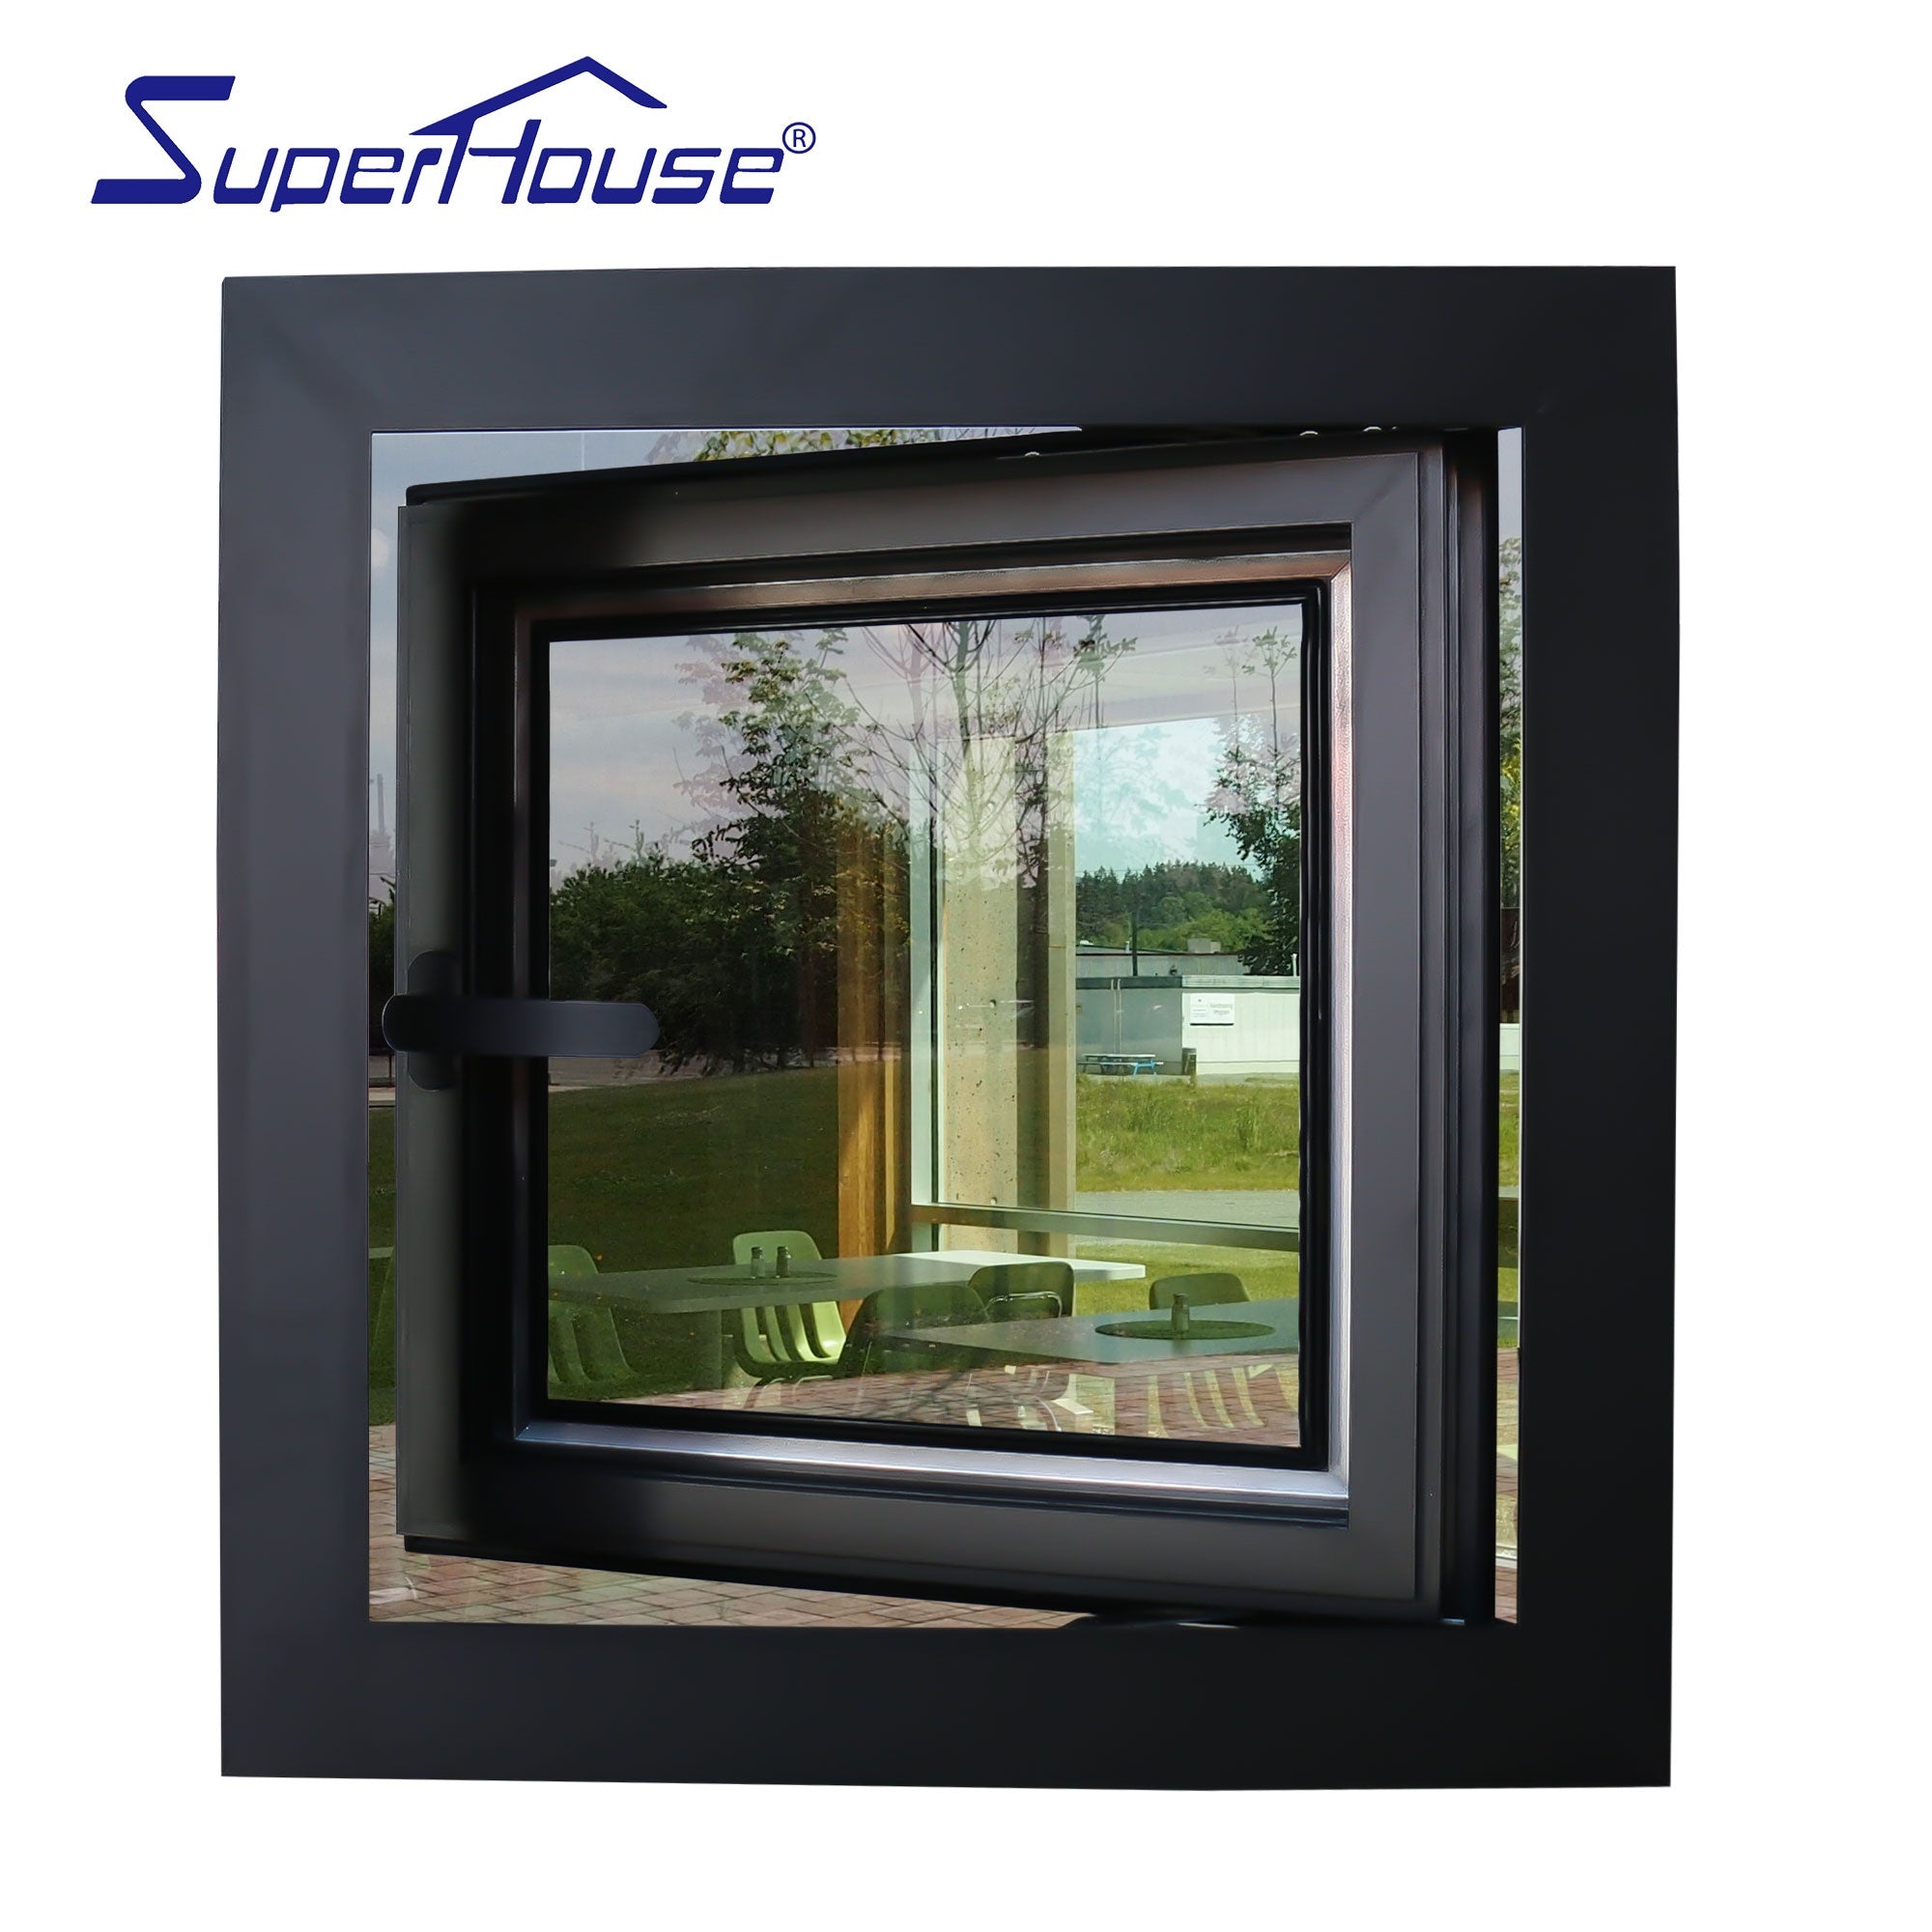 Superhouse Superhouse USA standard high quality aluminum frame glass windows and door